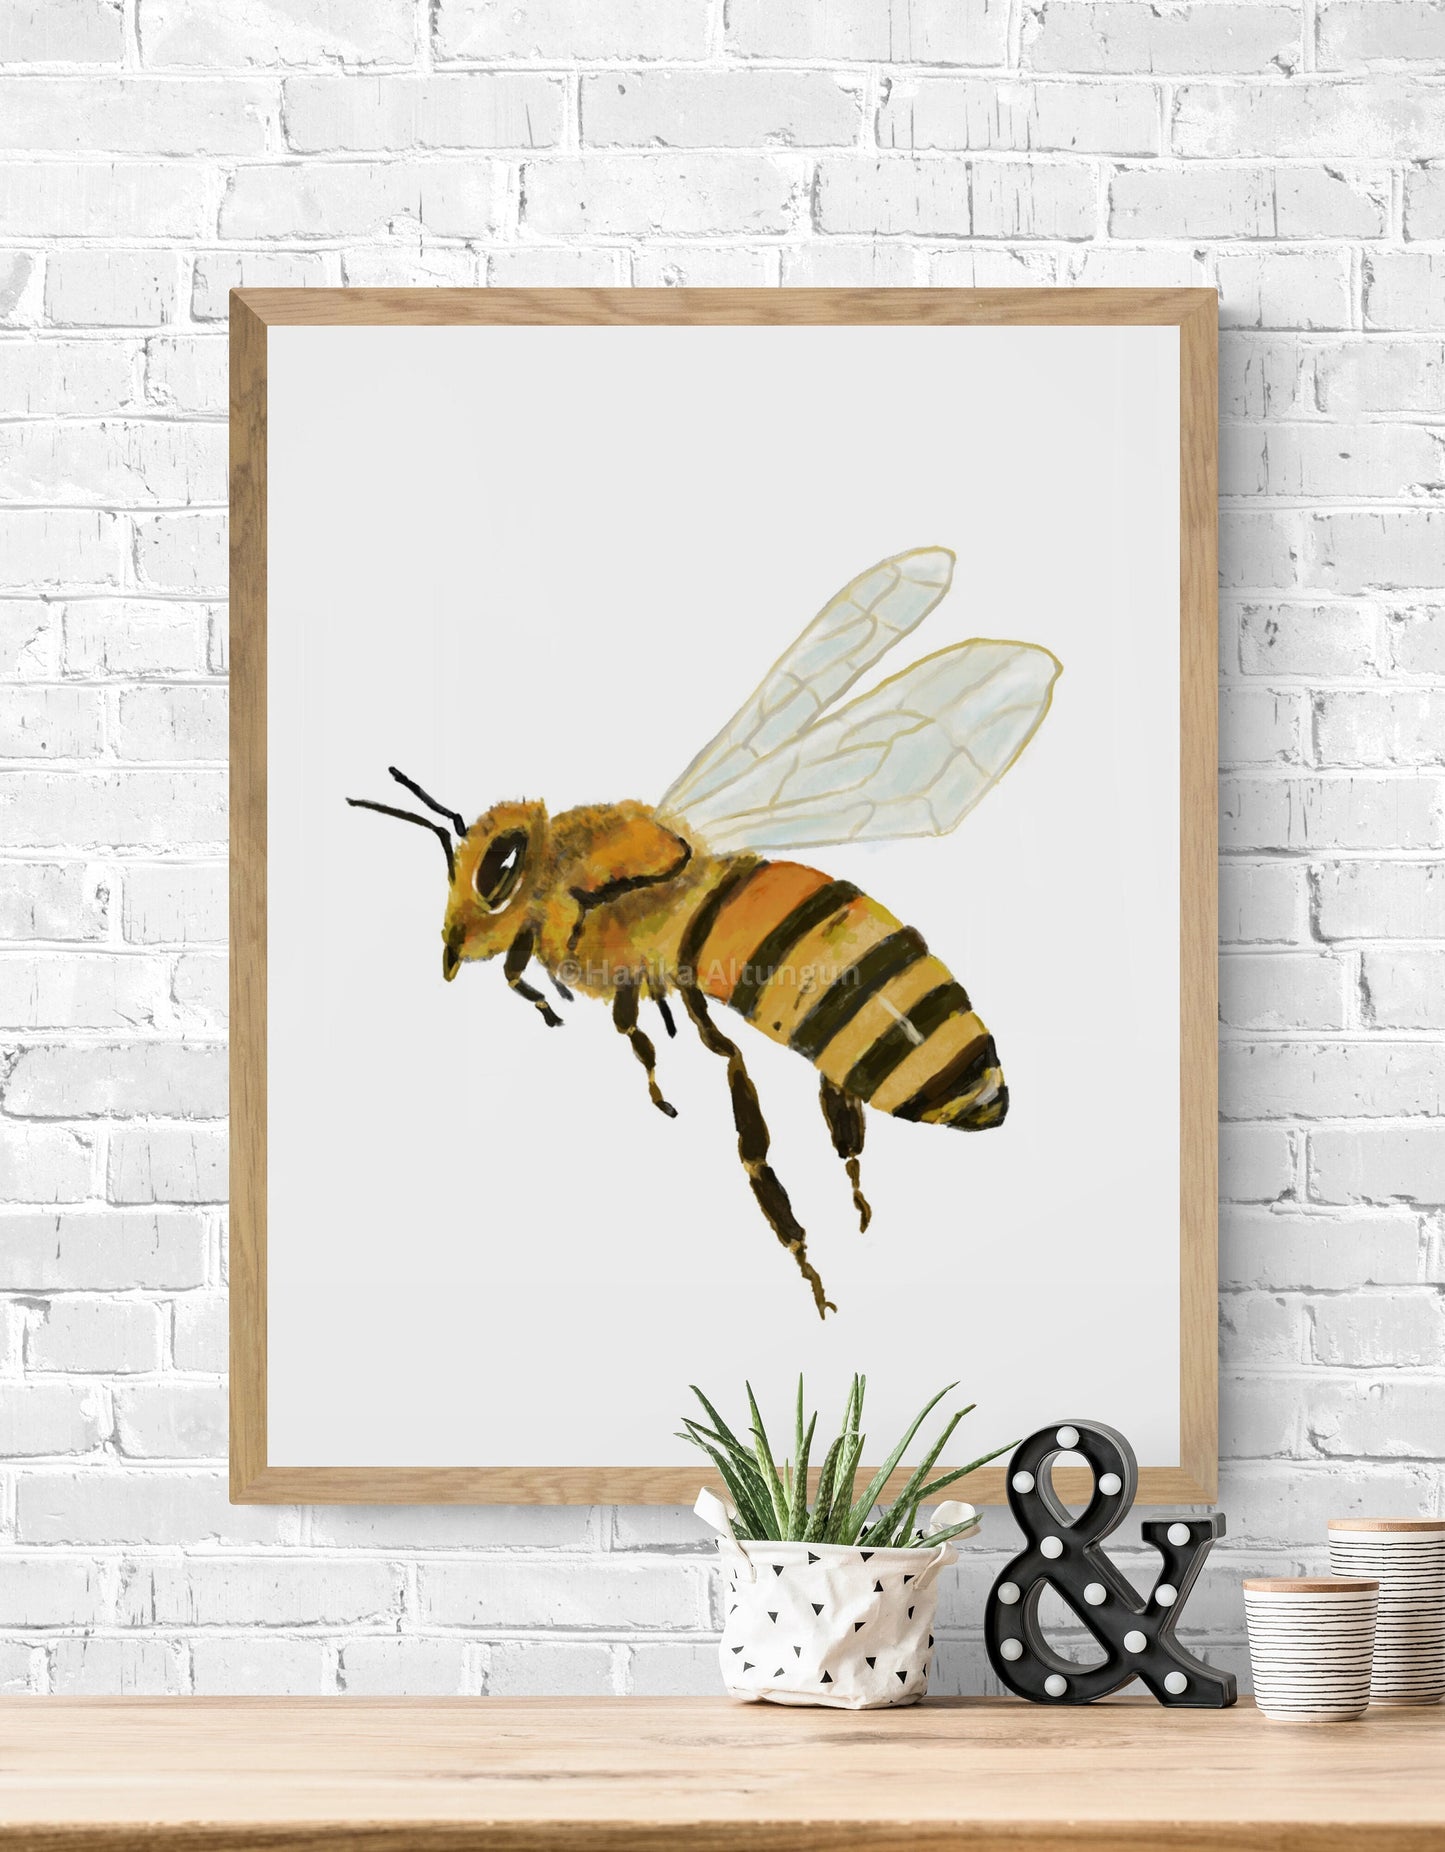 Honey Bee Print, Honeybee Portrait, Living Room Wall Art, Home Decor, Wildlife Illustration, Animal Lover Gift, Kitchen Wall Painting